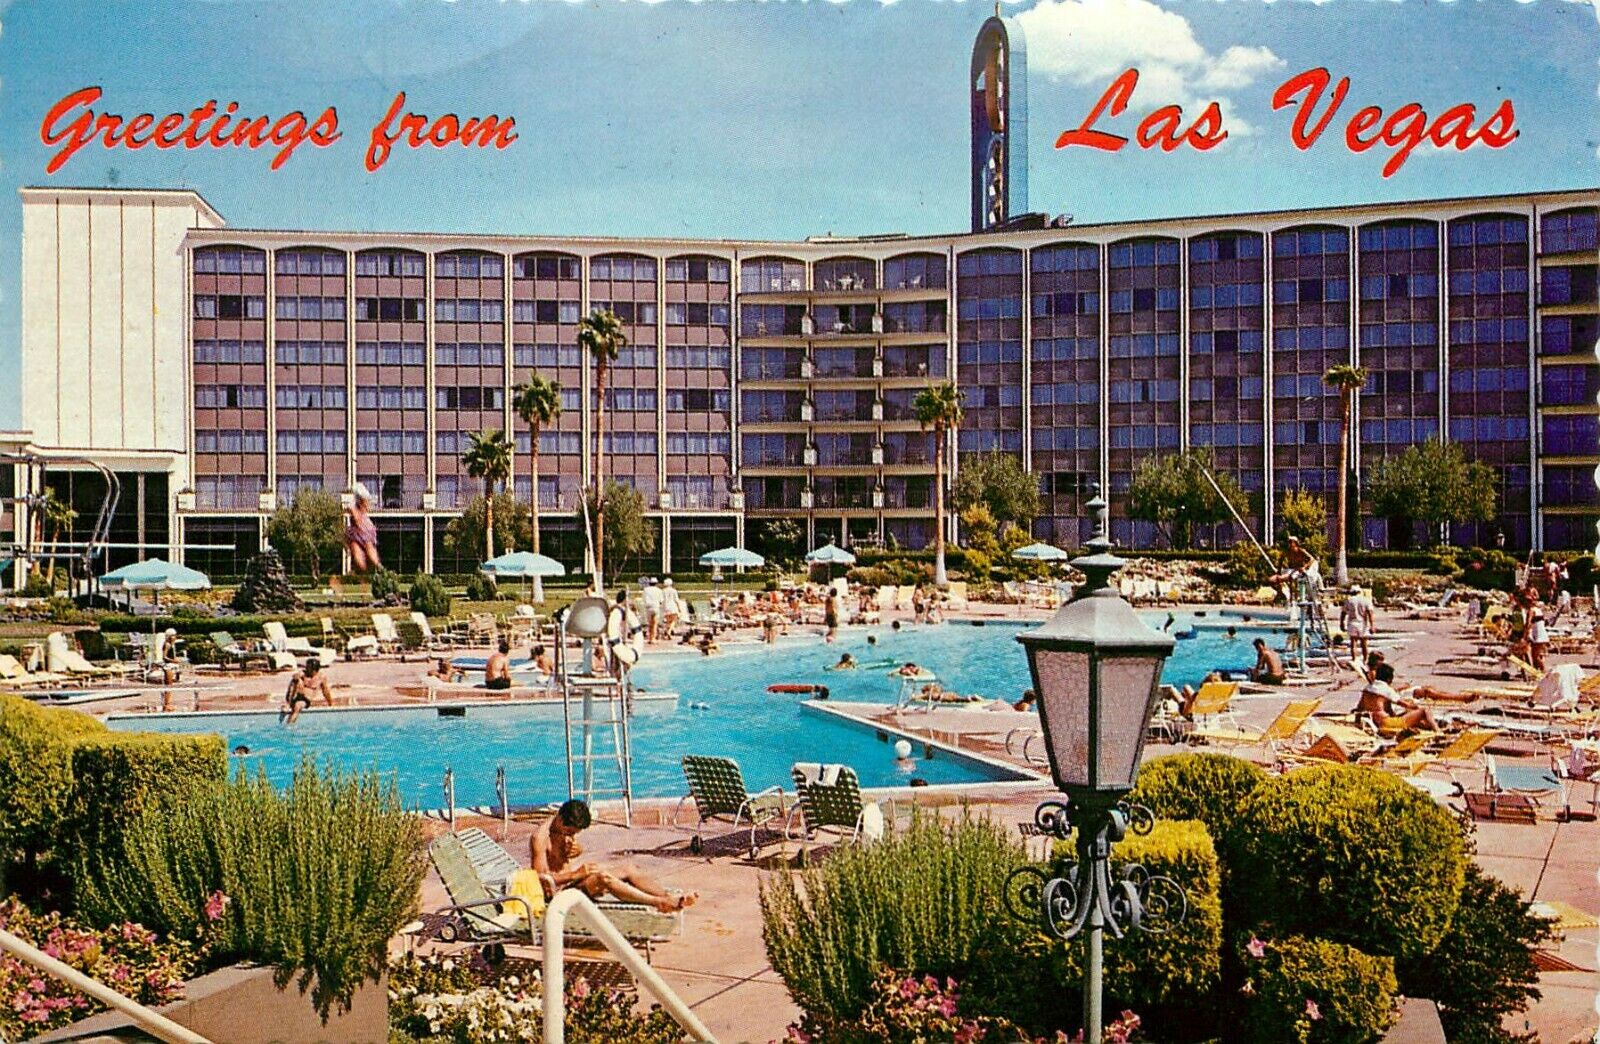 Frontier Hotel CAsino Las Vegas Nevada NV pm  Postcard